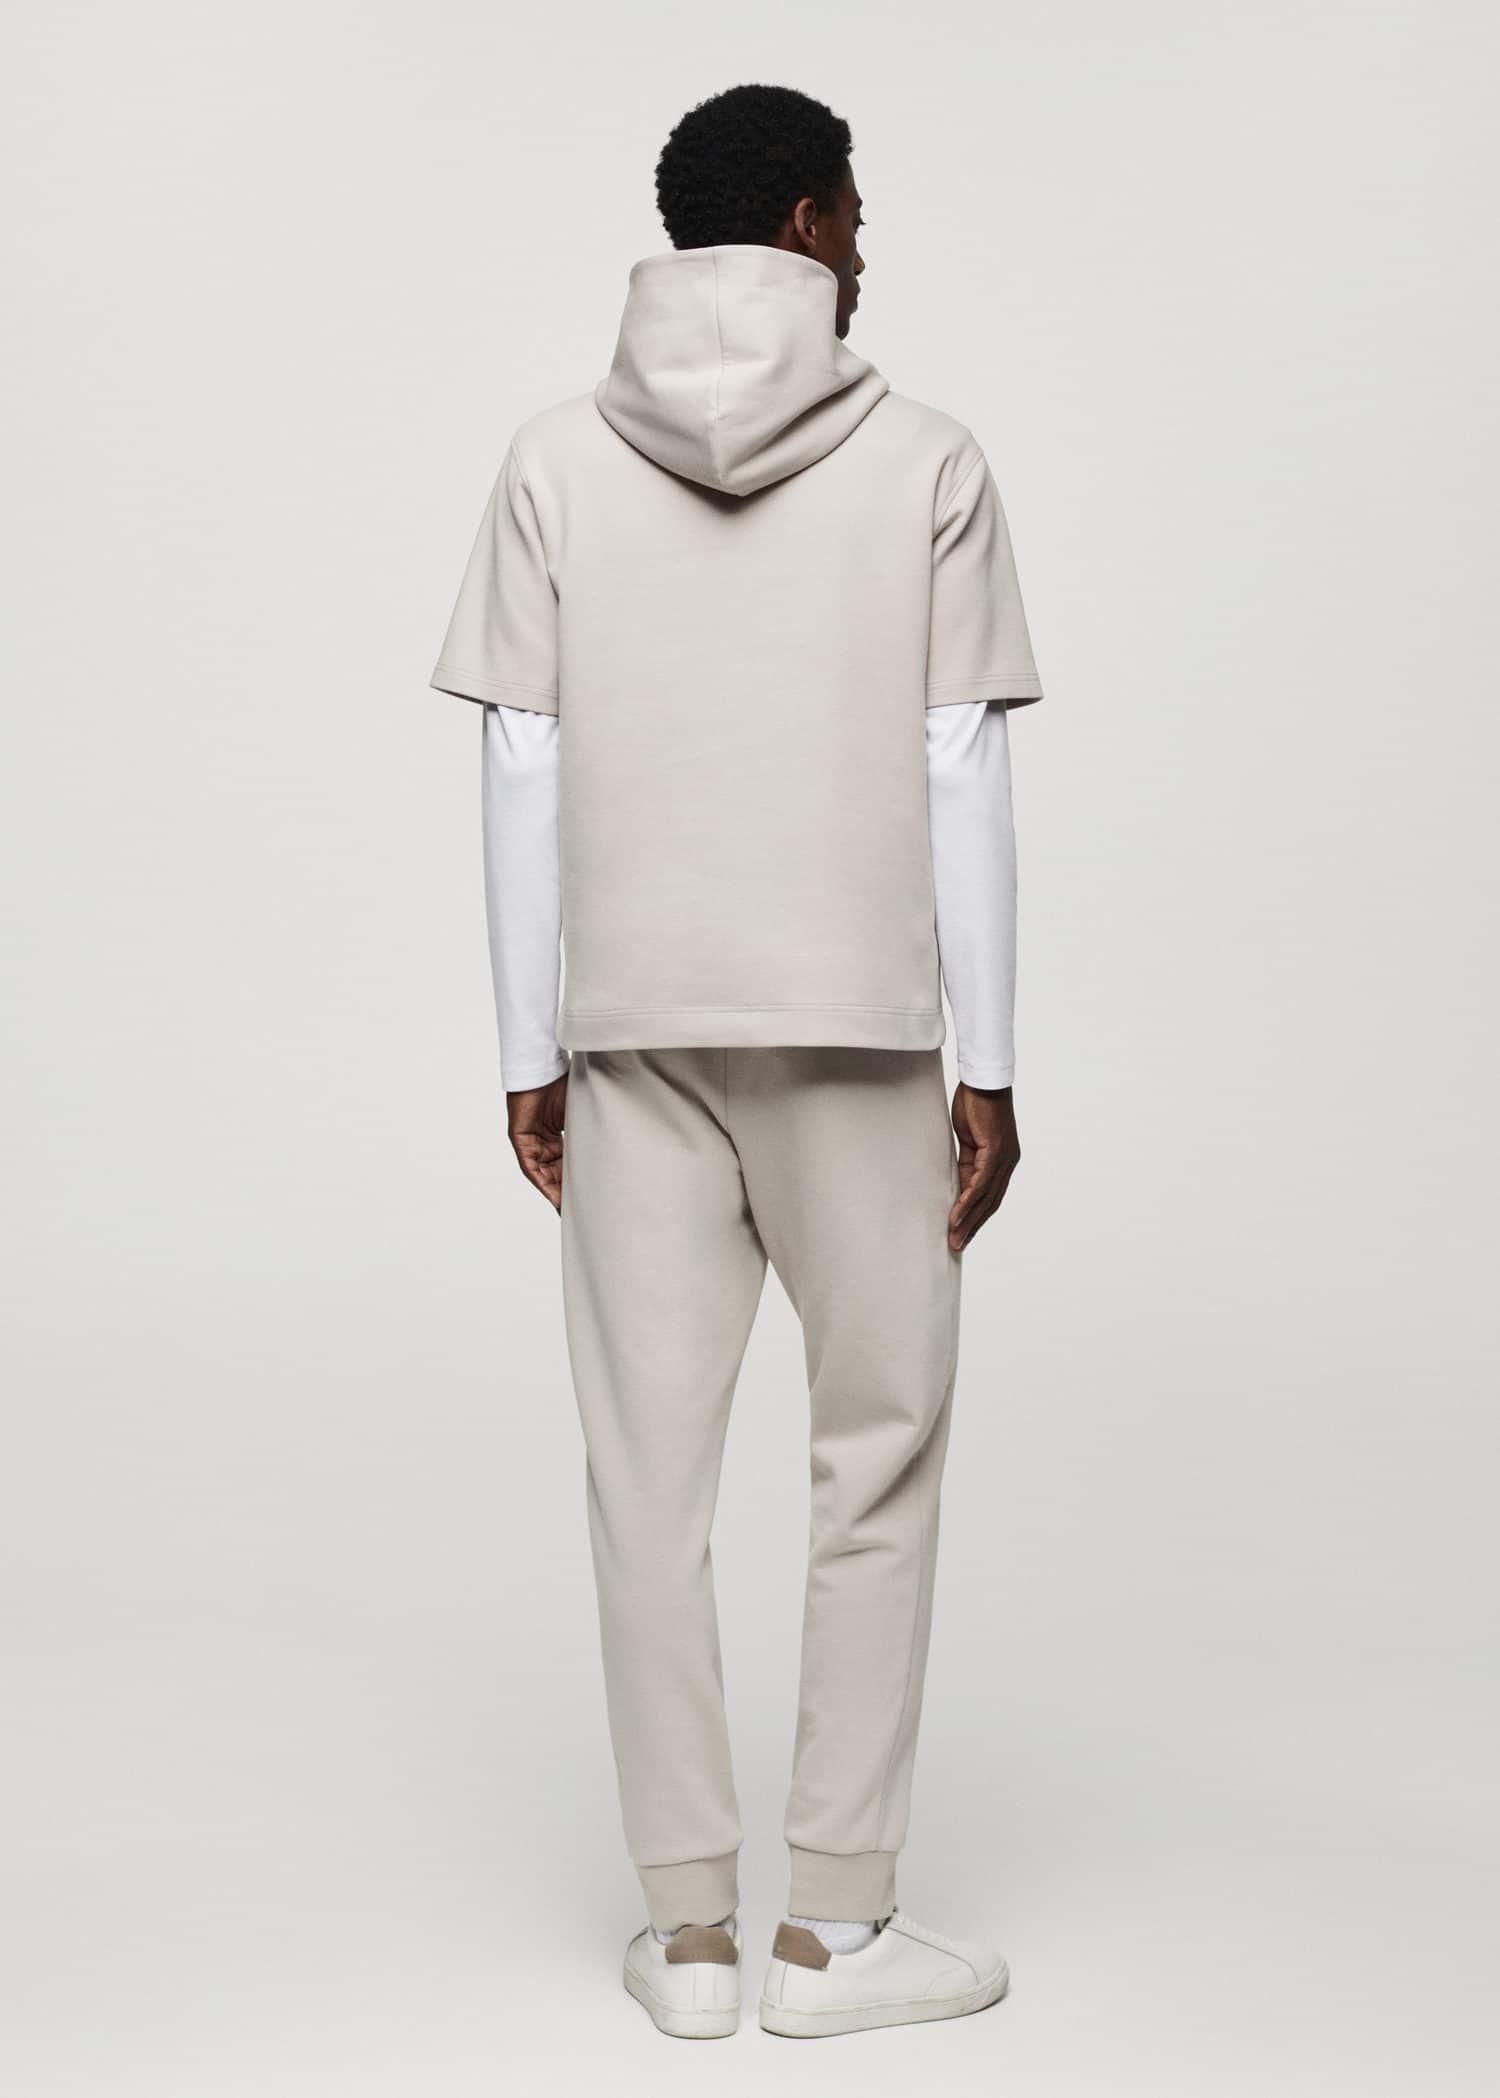 Mango - White Short-Sleeved Hooded Sweatshirt